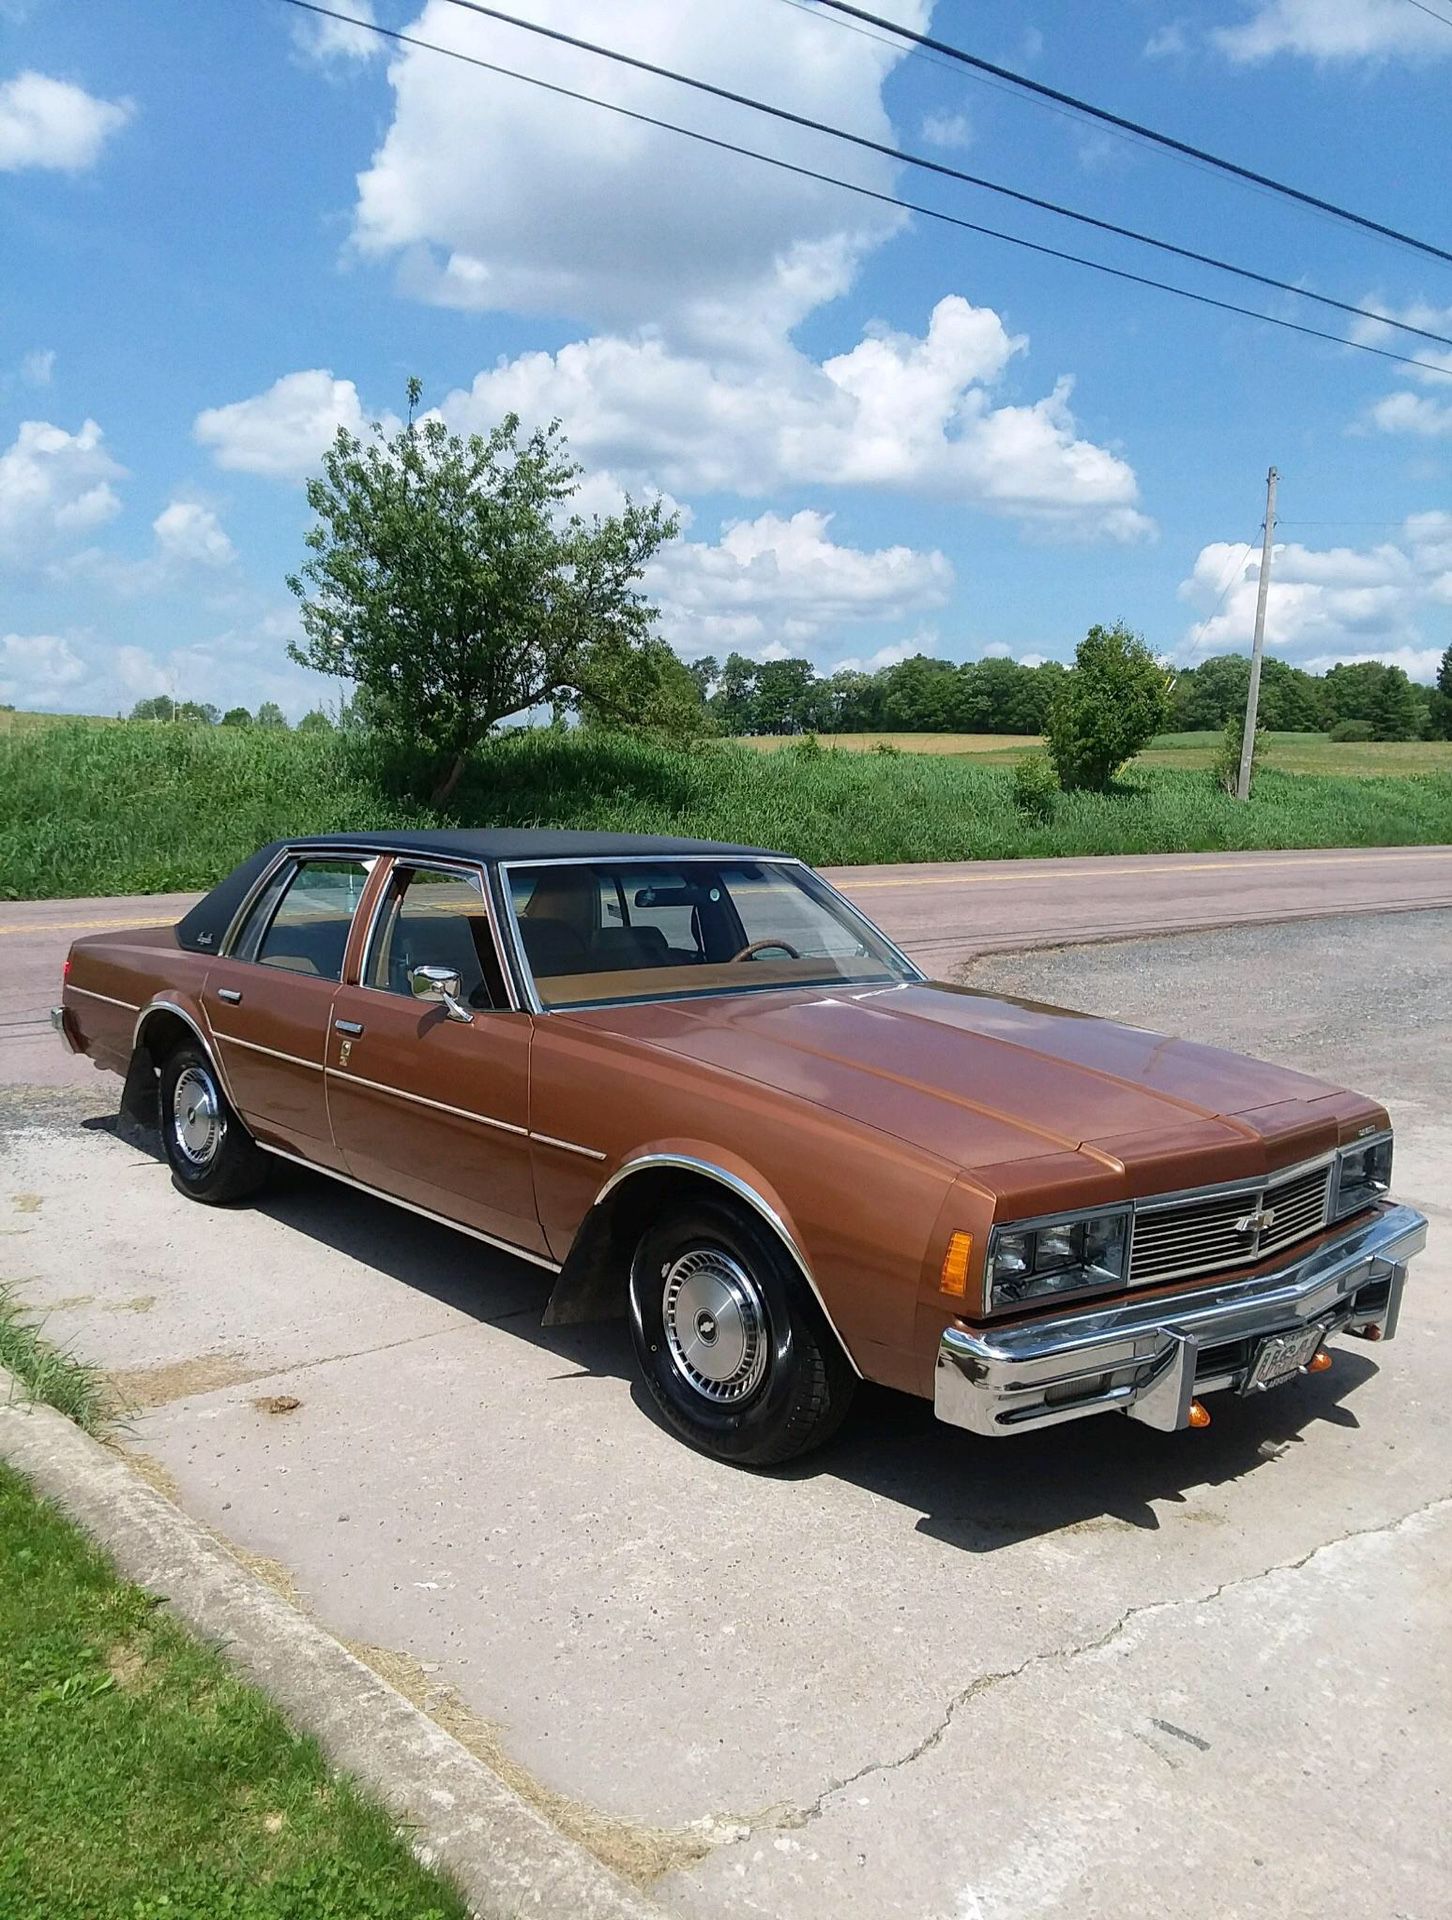 1979 Chevy impala